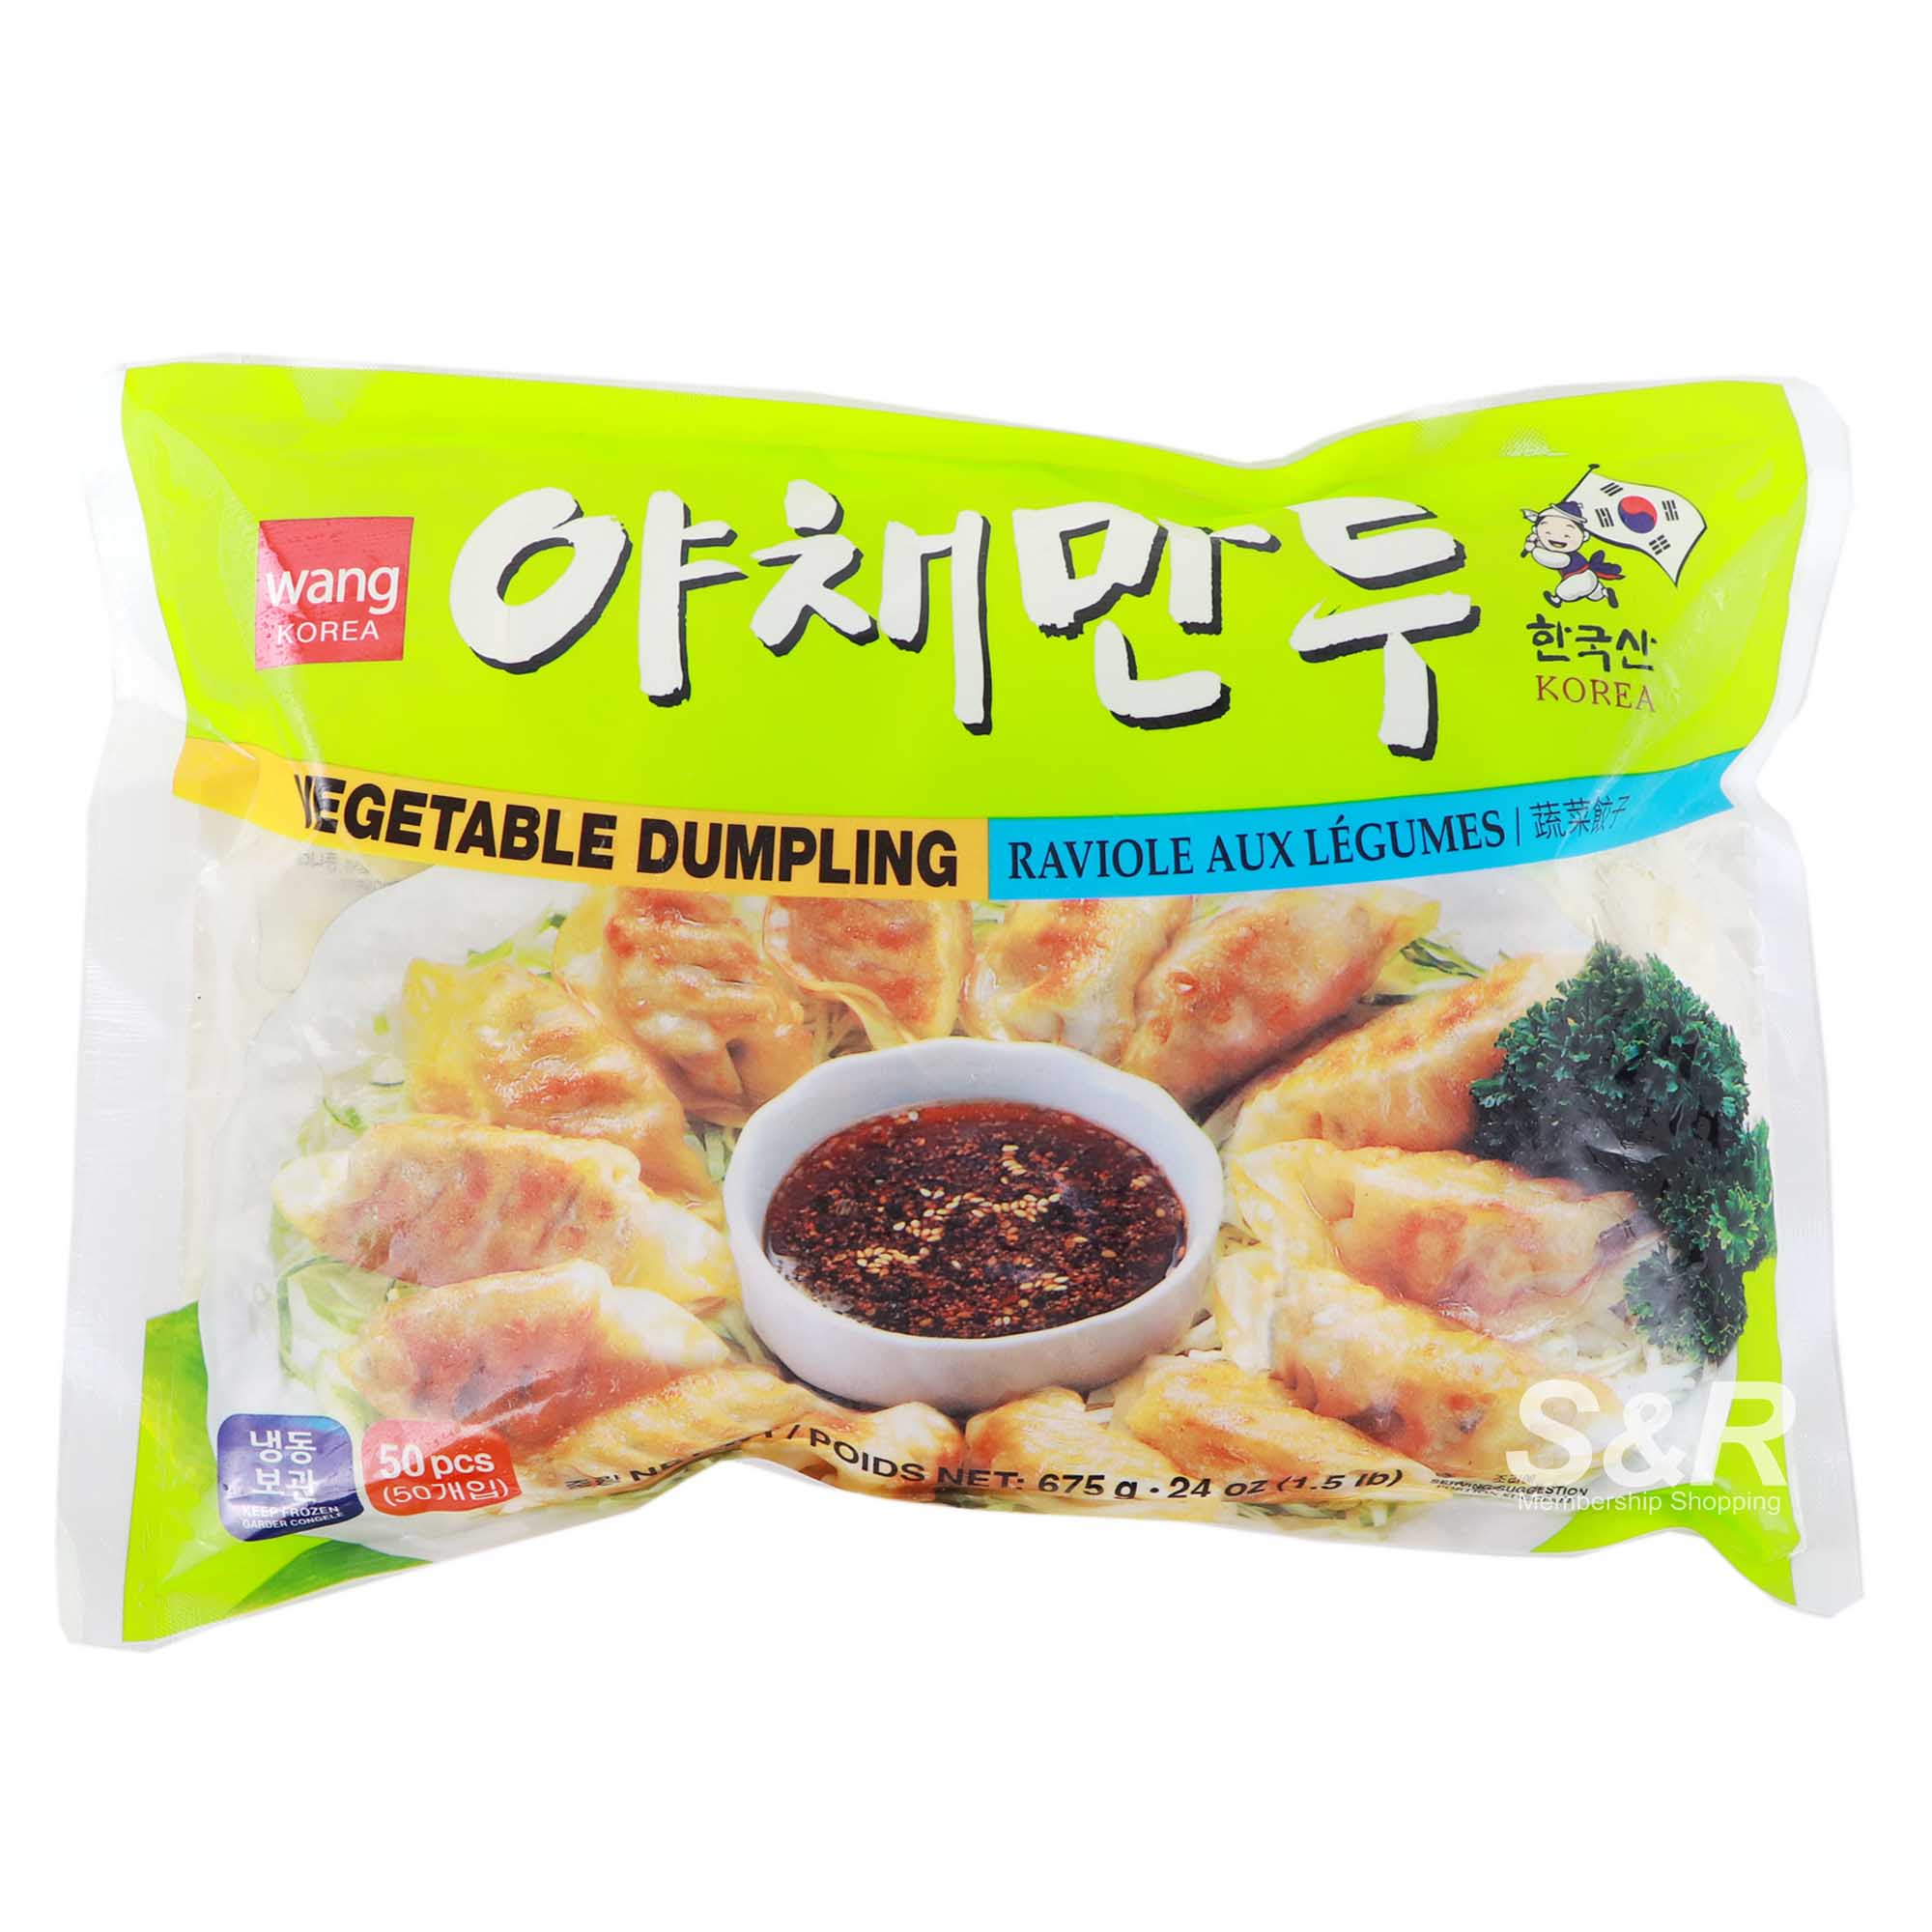 Wang Vegetable Dumplings 675g